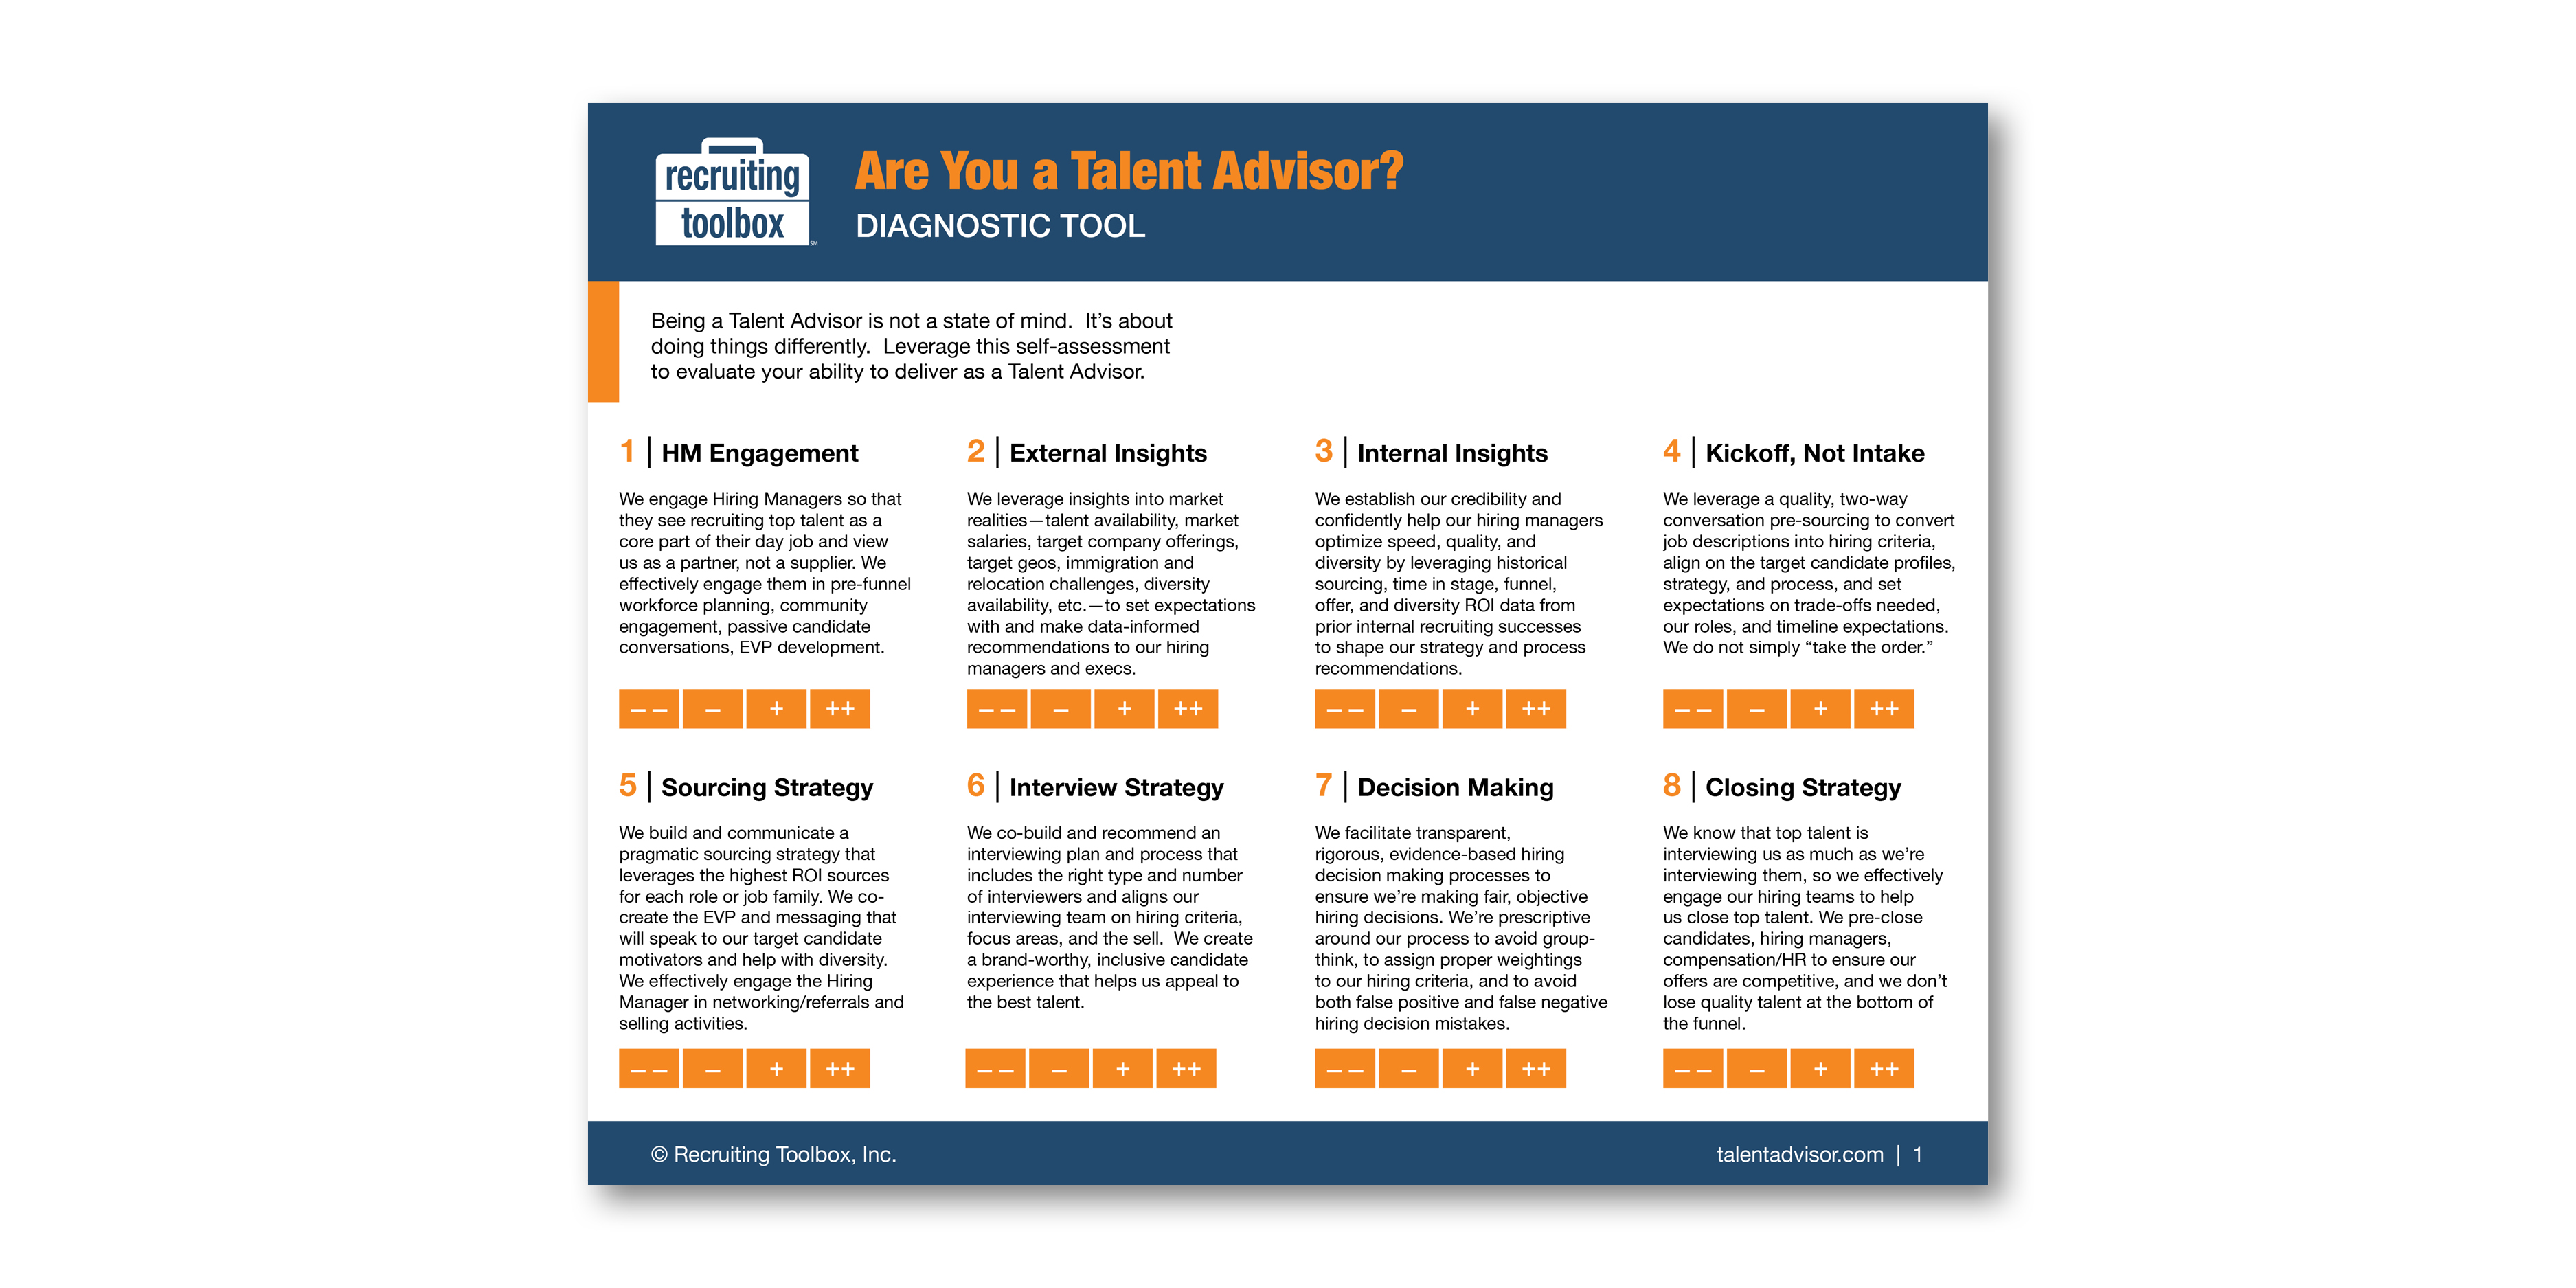 Am I operating as a talent advisor?